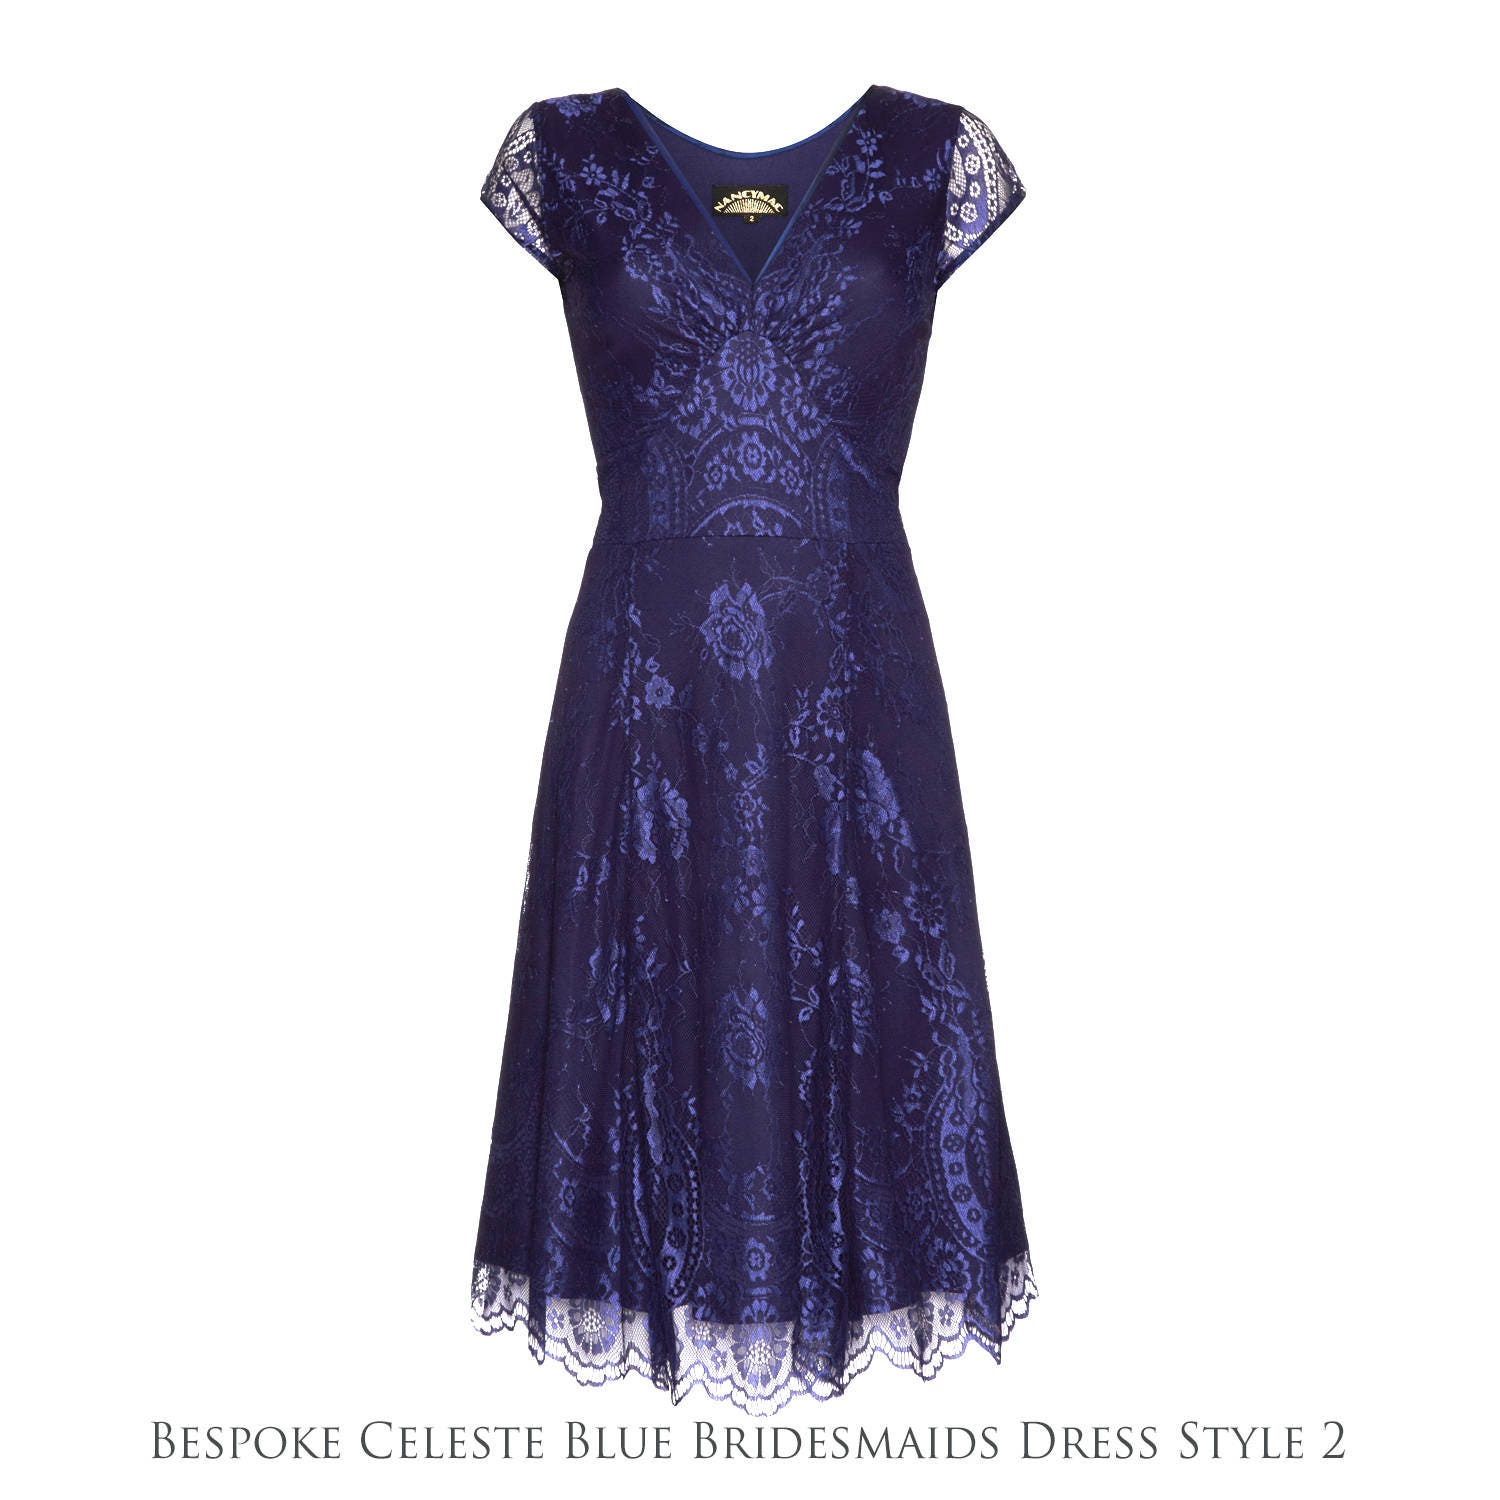 Bespoke Vintage Style Bridesmaid Dresses in Celeste Blue Lace | Etsy